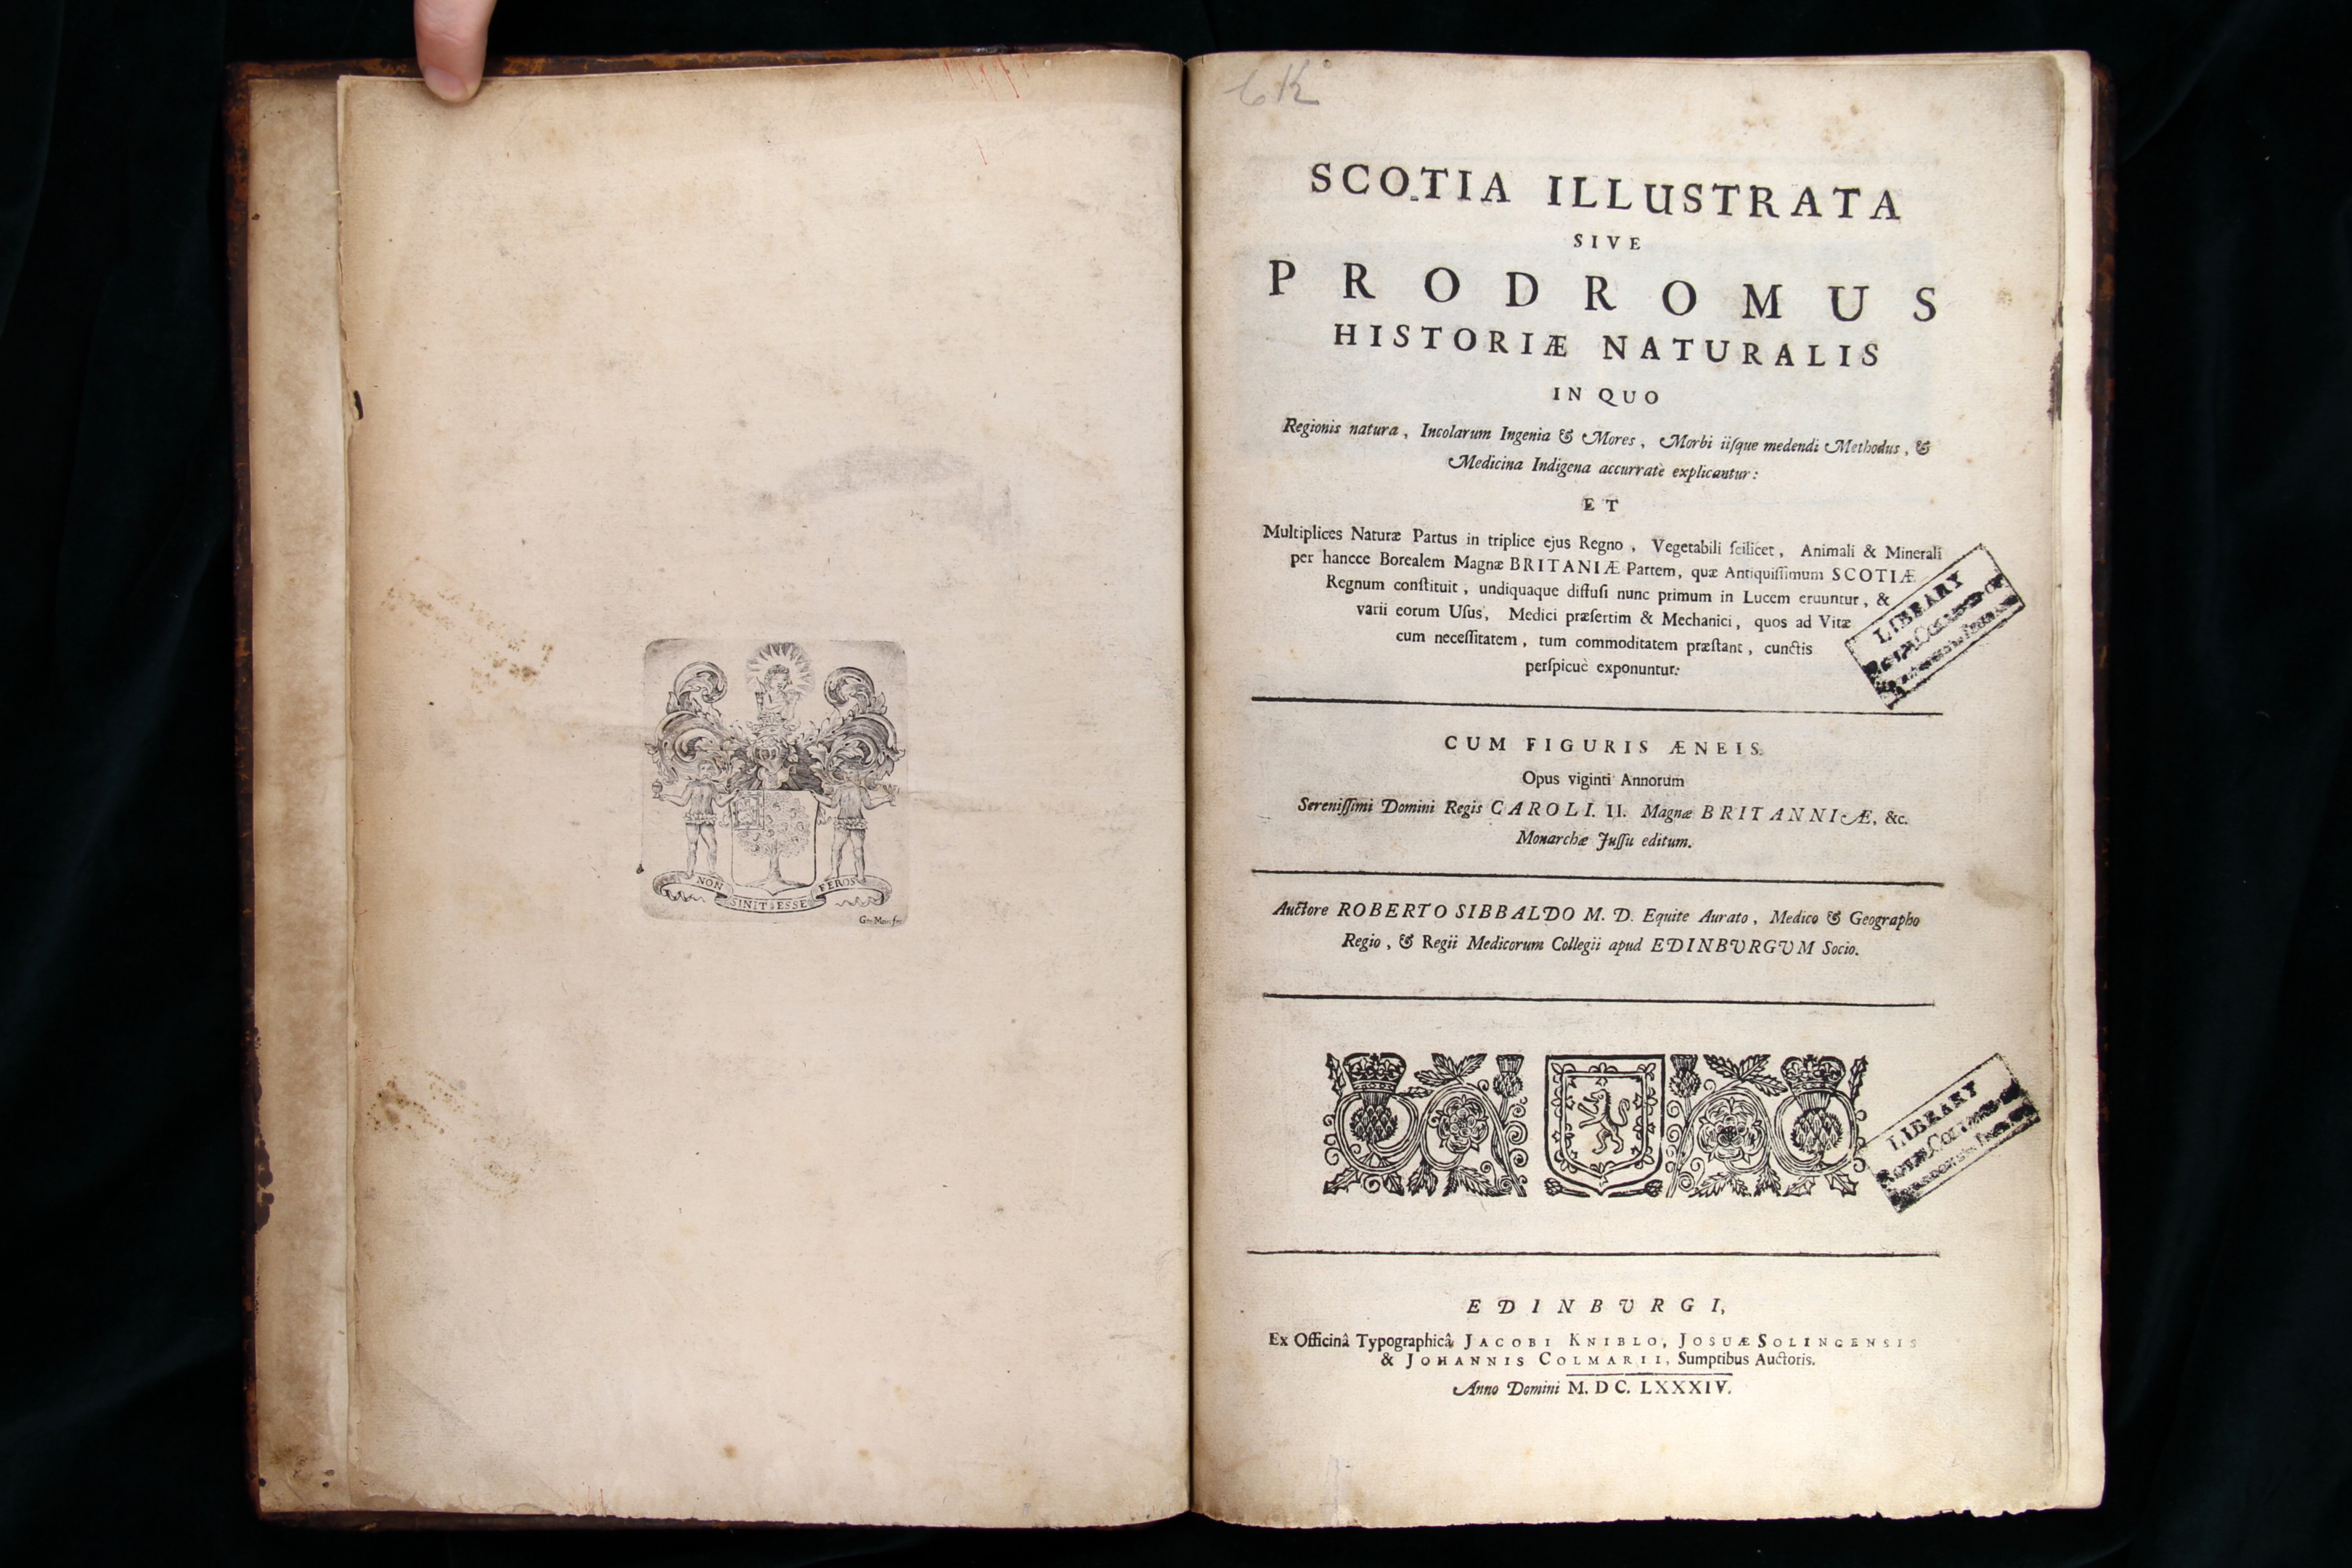 Sample page from Scotia Illustrata sive Prodromus Historiae Naturalis